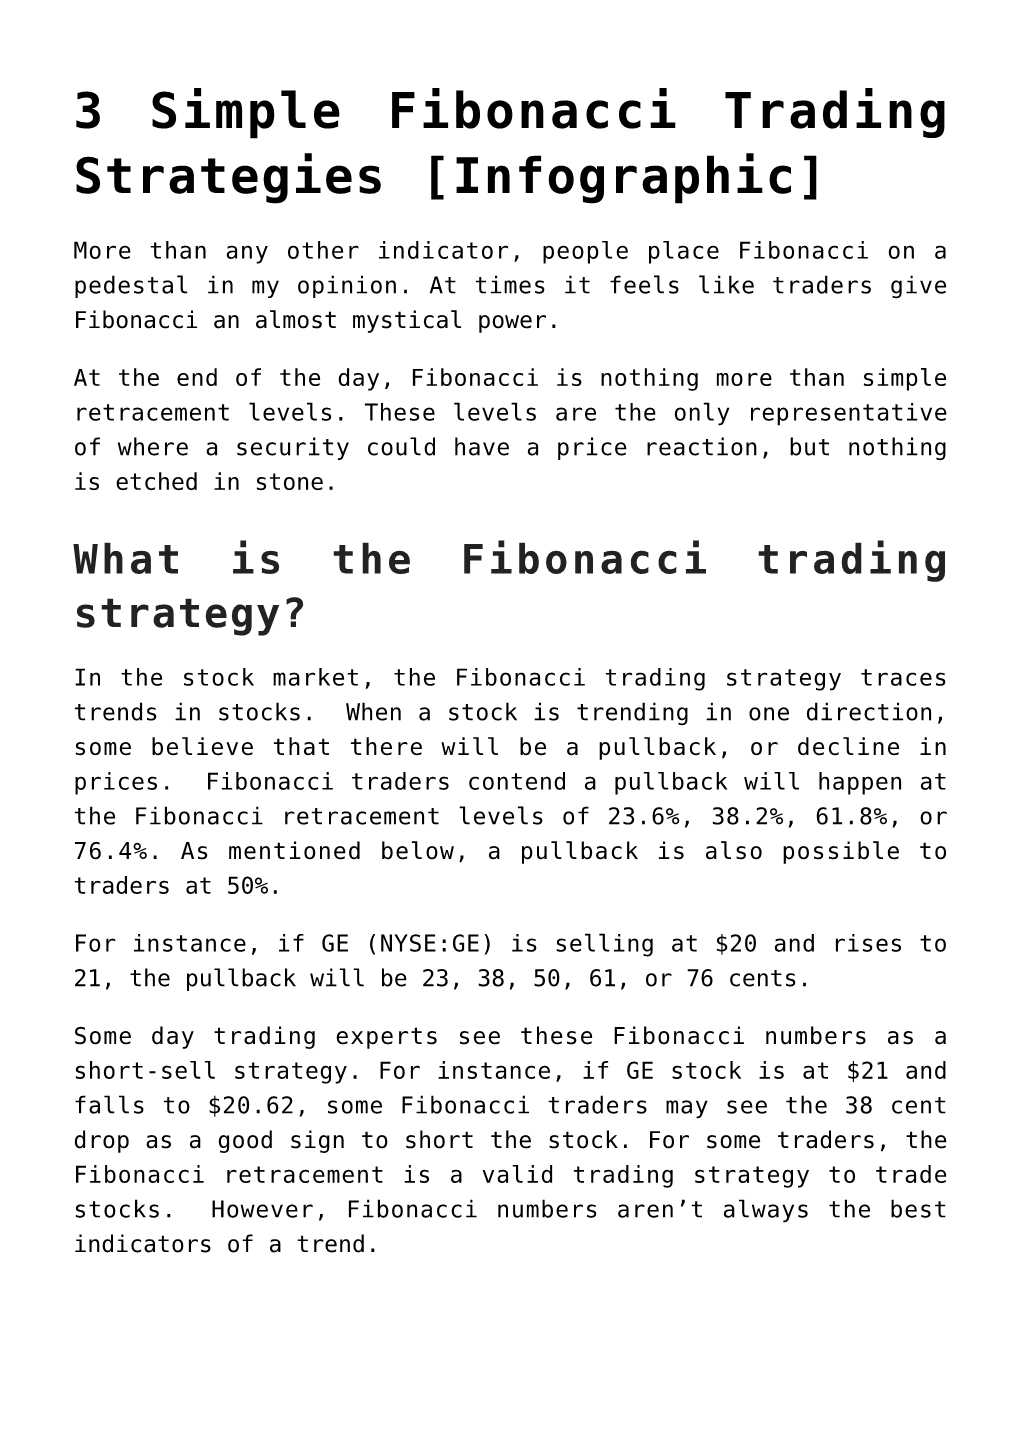 What Is the Fibonacci Trading Strategy?